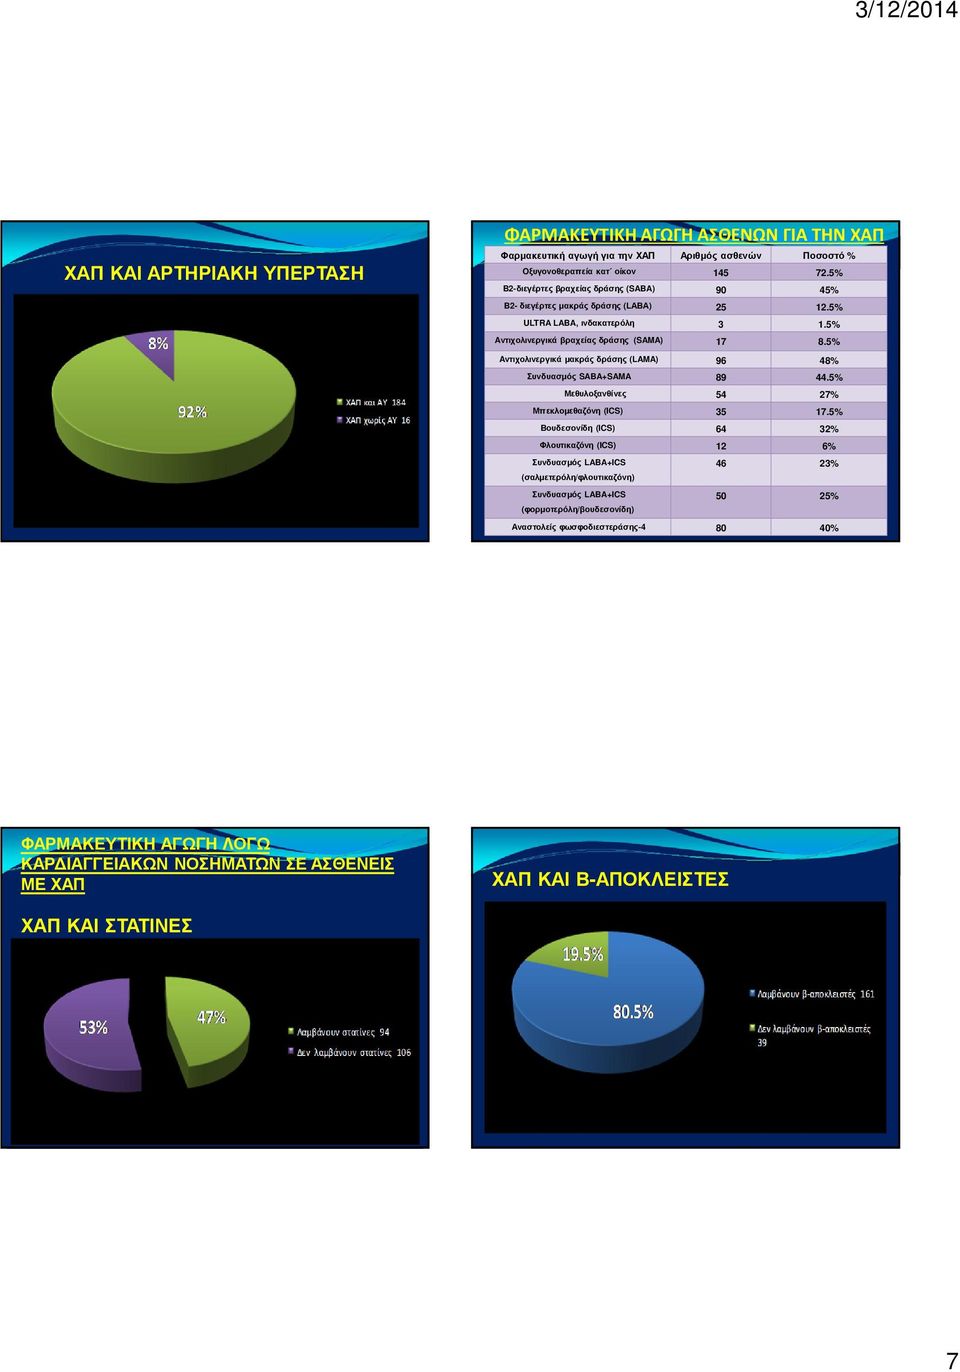 5% Aντιχολινεργικά µακράς δράσης (LAMA) 96 48% Συνδυασµός SABA+SAMA 89 44.5% Μεθυλοξανθίνες 54 27% Μπεκλοµεθαζόνη (ICS) 35 17.